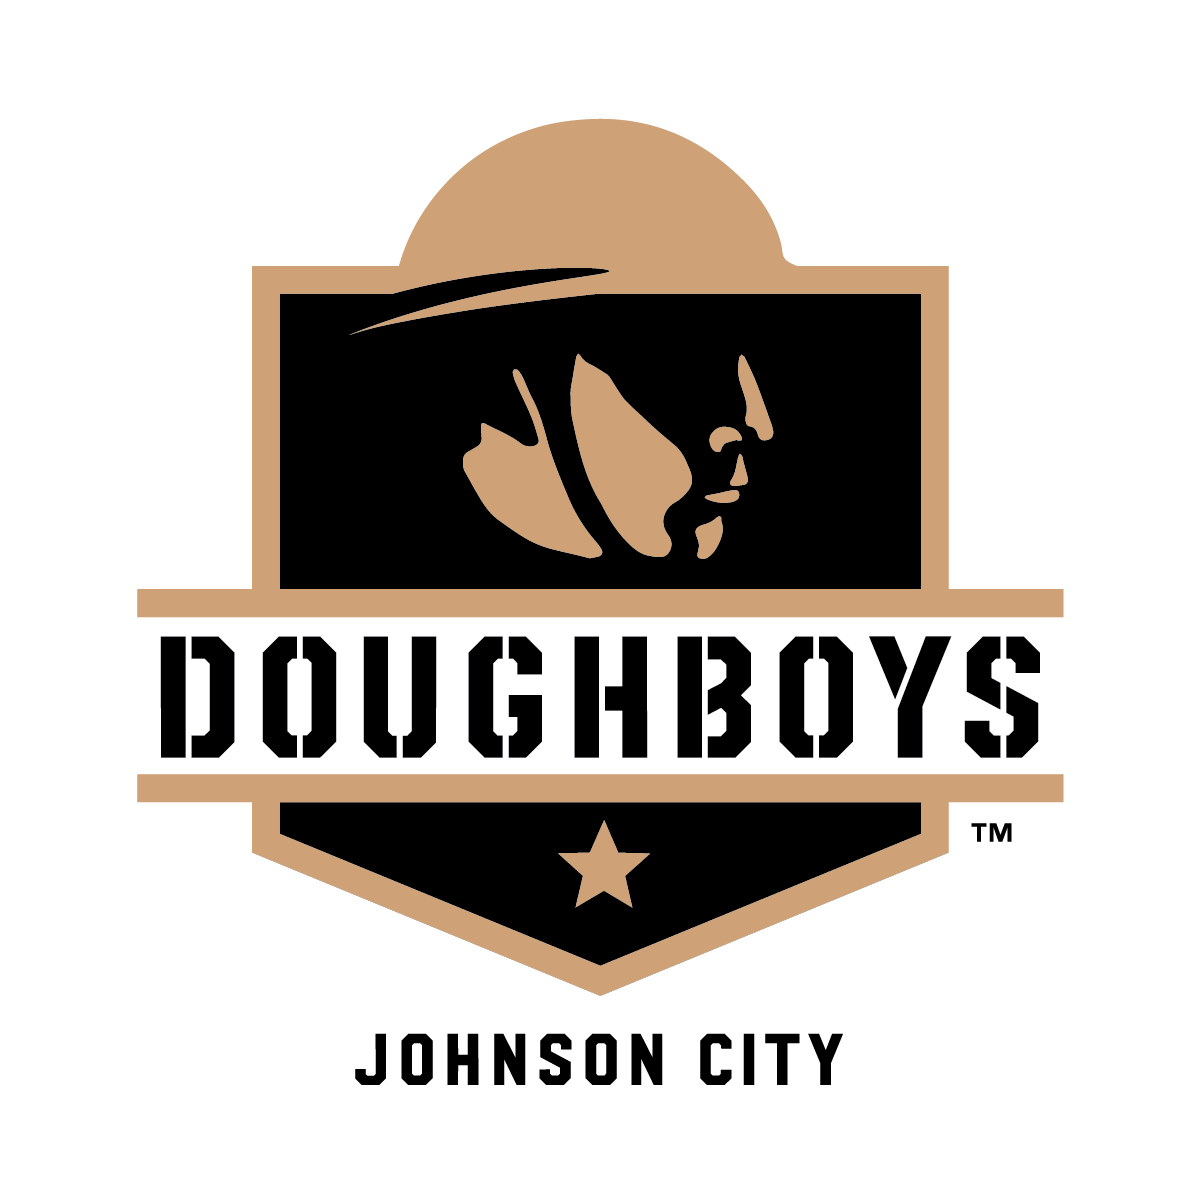 Johnson City Doughboys vs. Tri-State Baseball